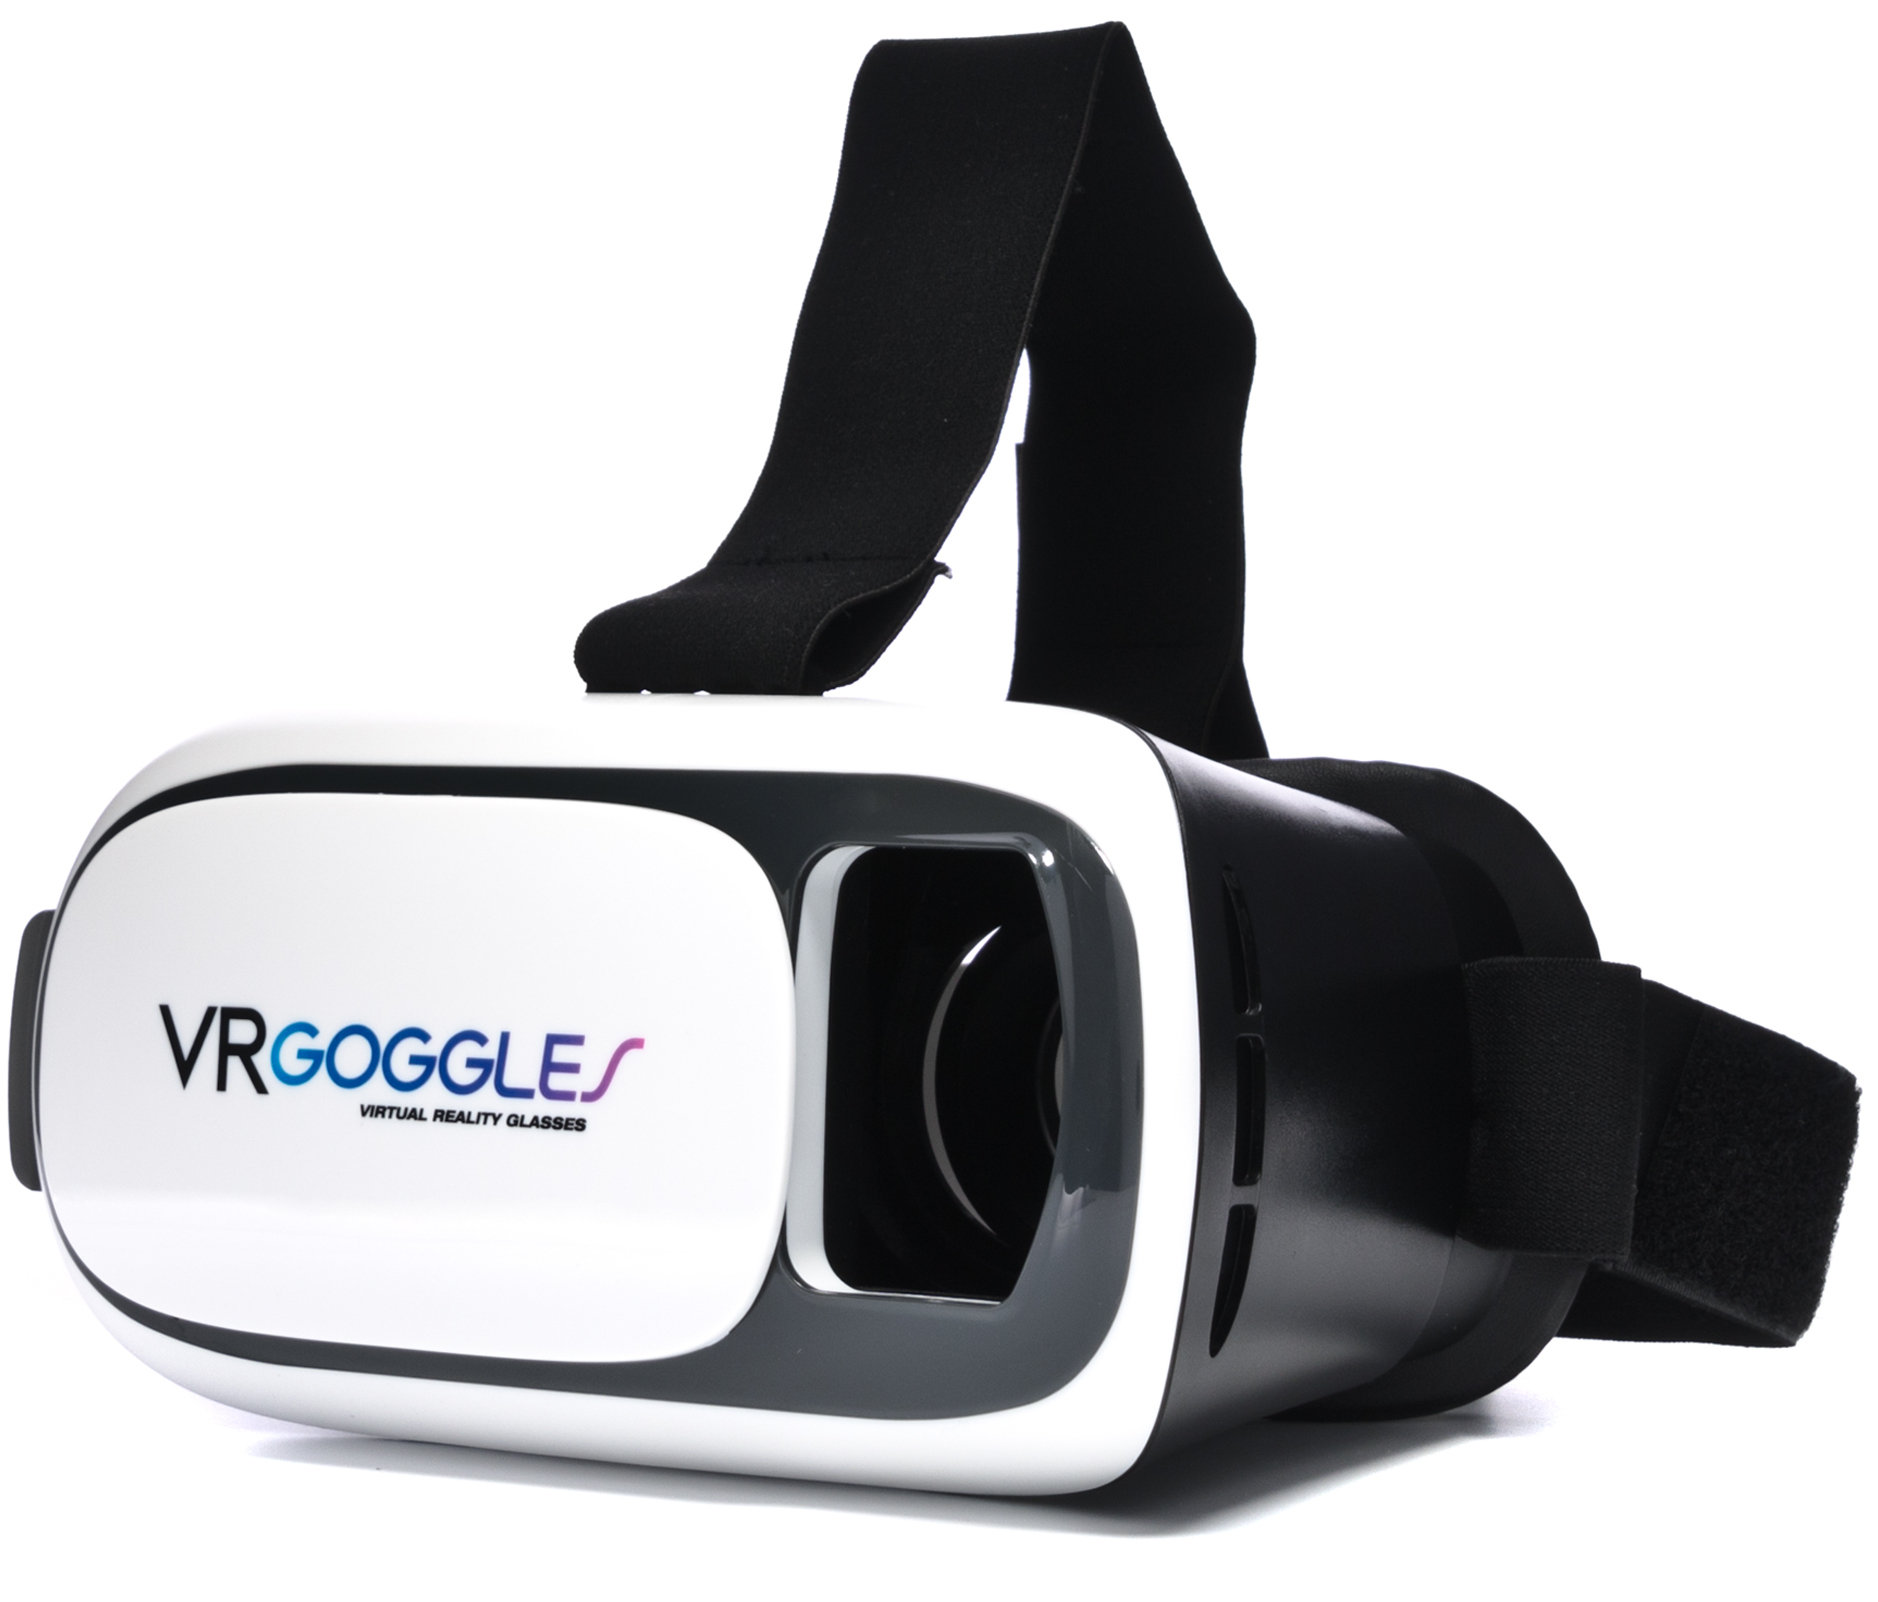 XENIC VR-VIII Gogle VR - niskie ceny i opinie w Media Expert